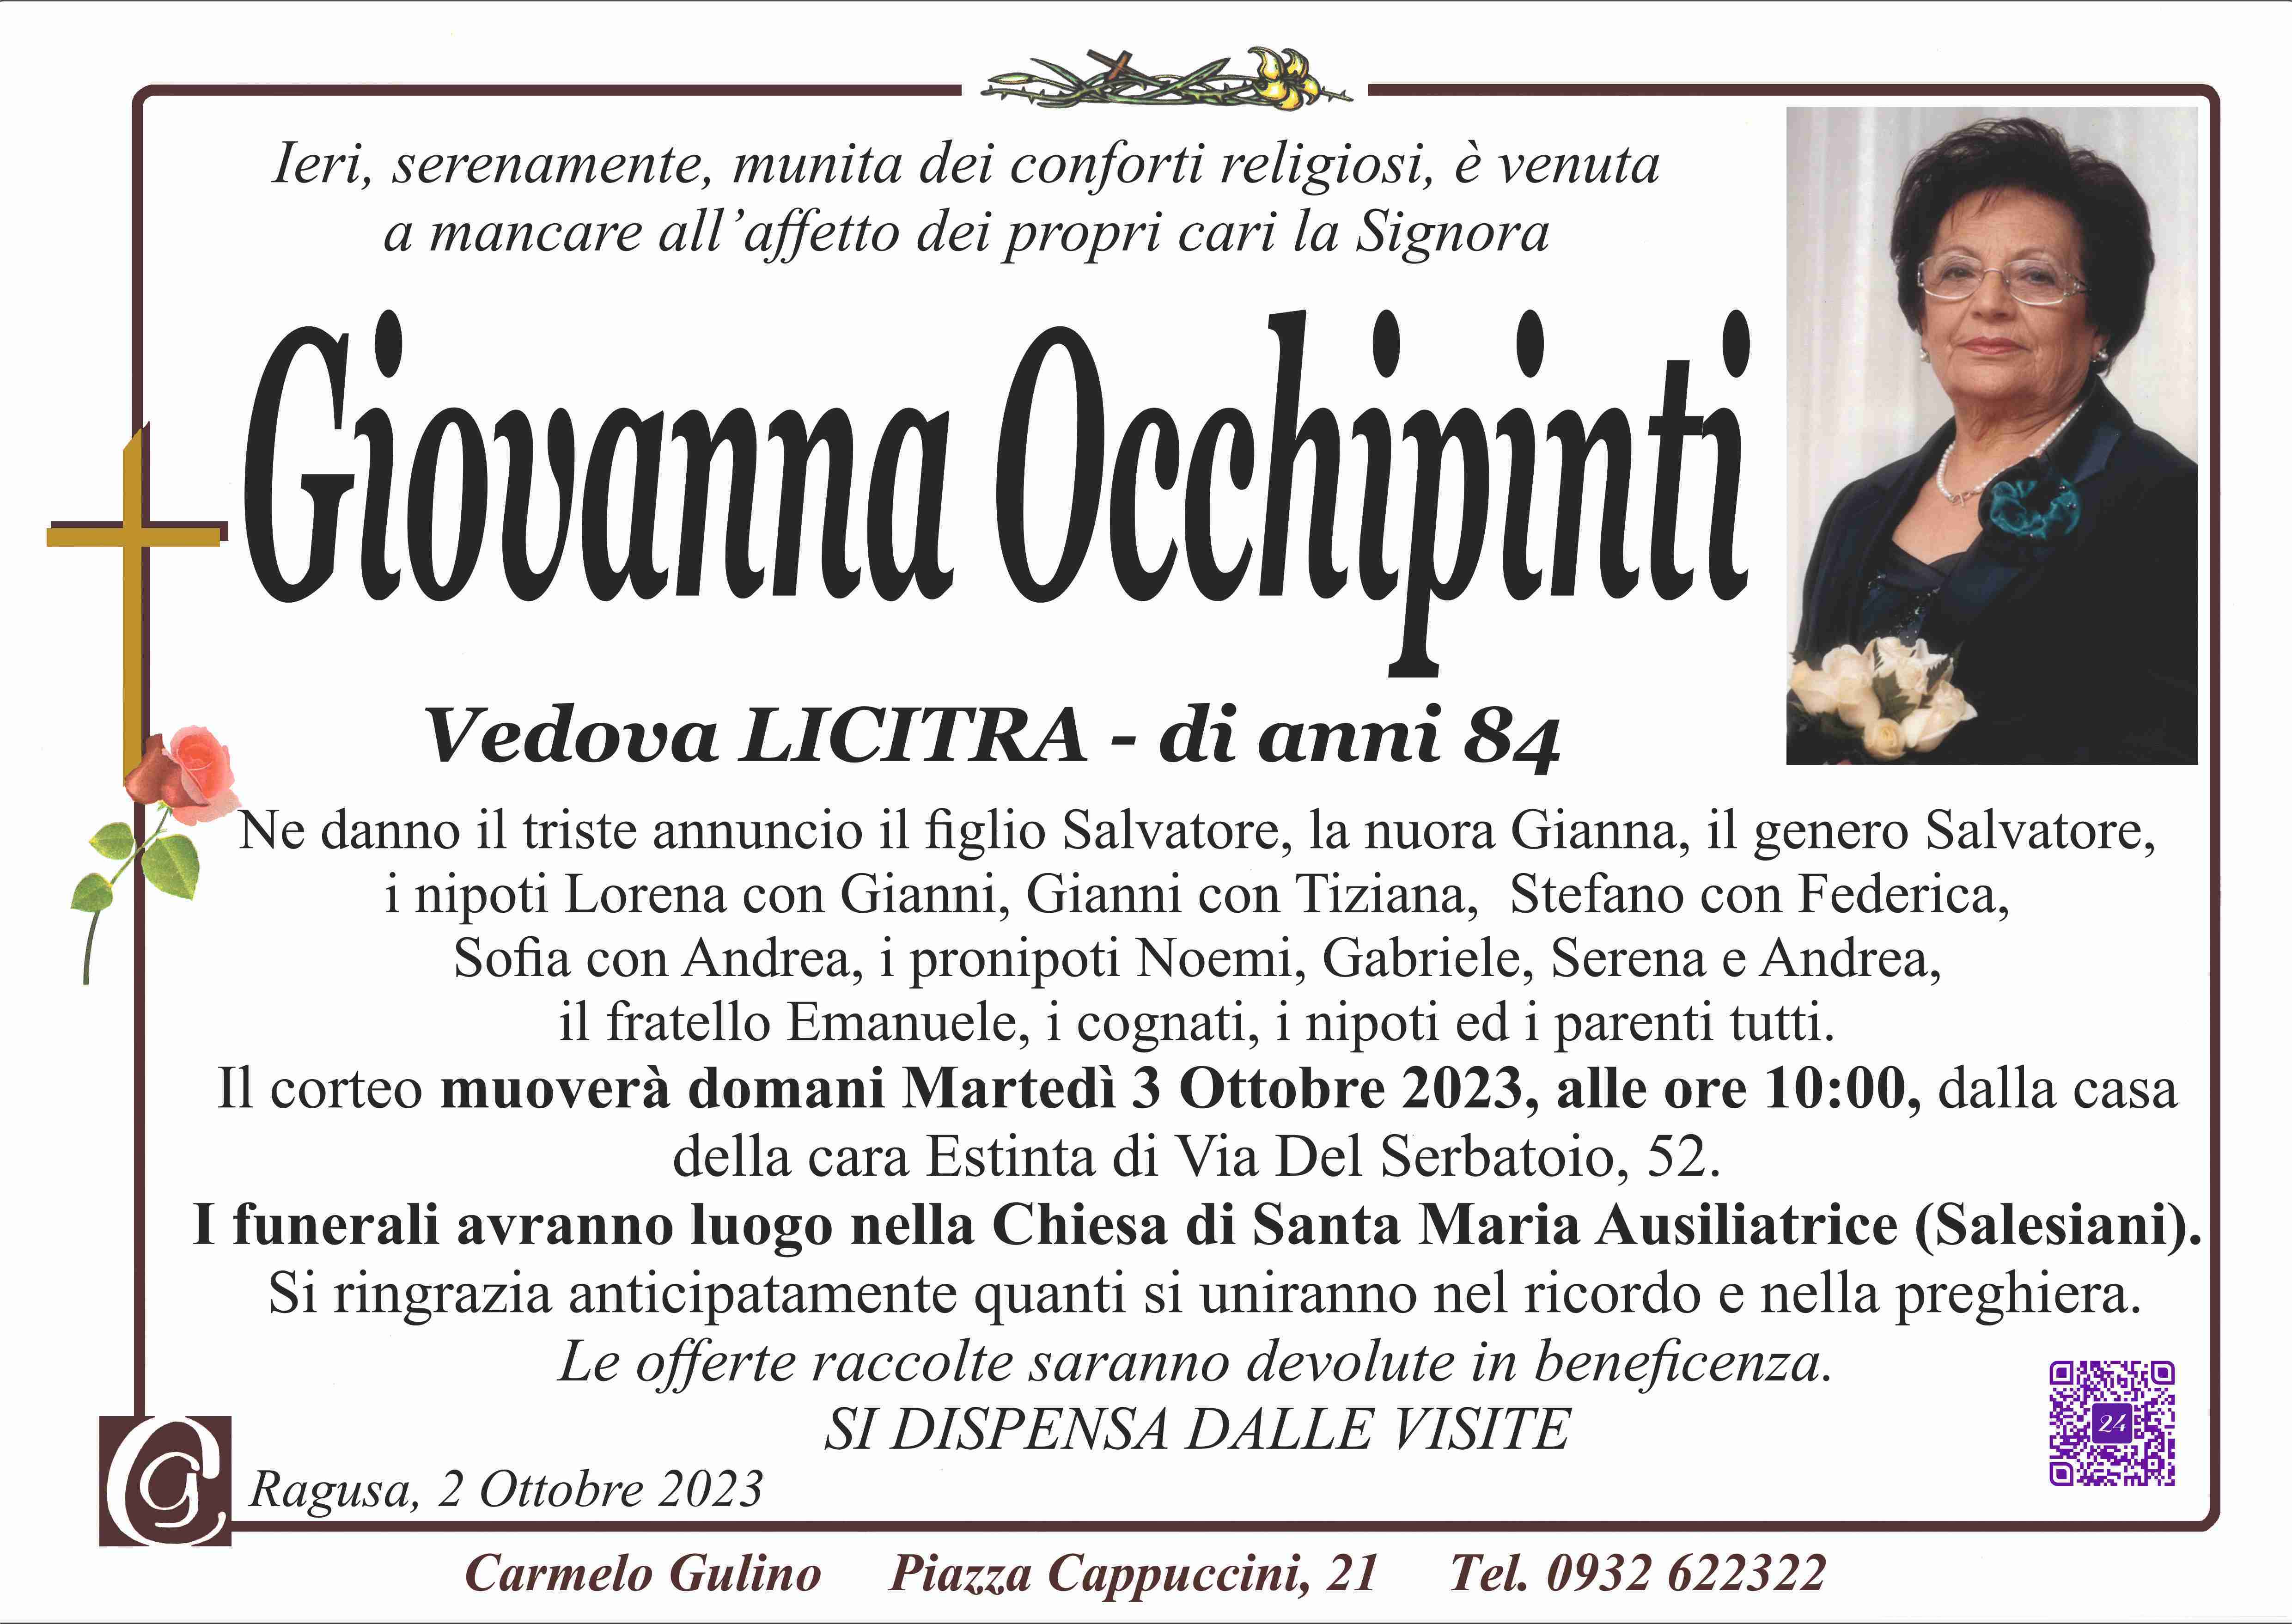 Giovanna Occhipinti